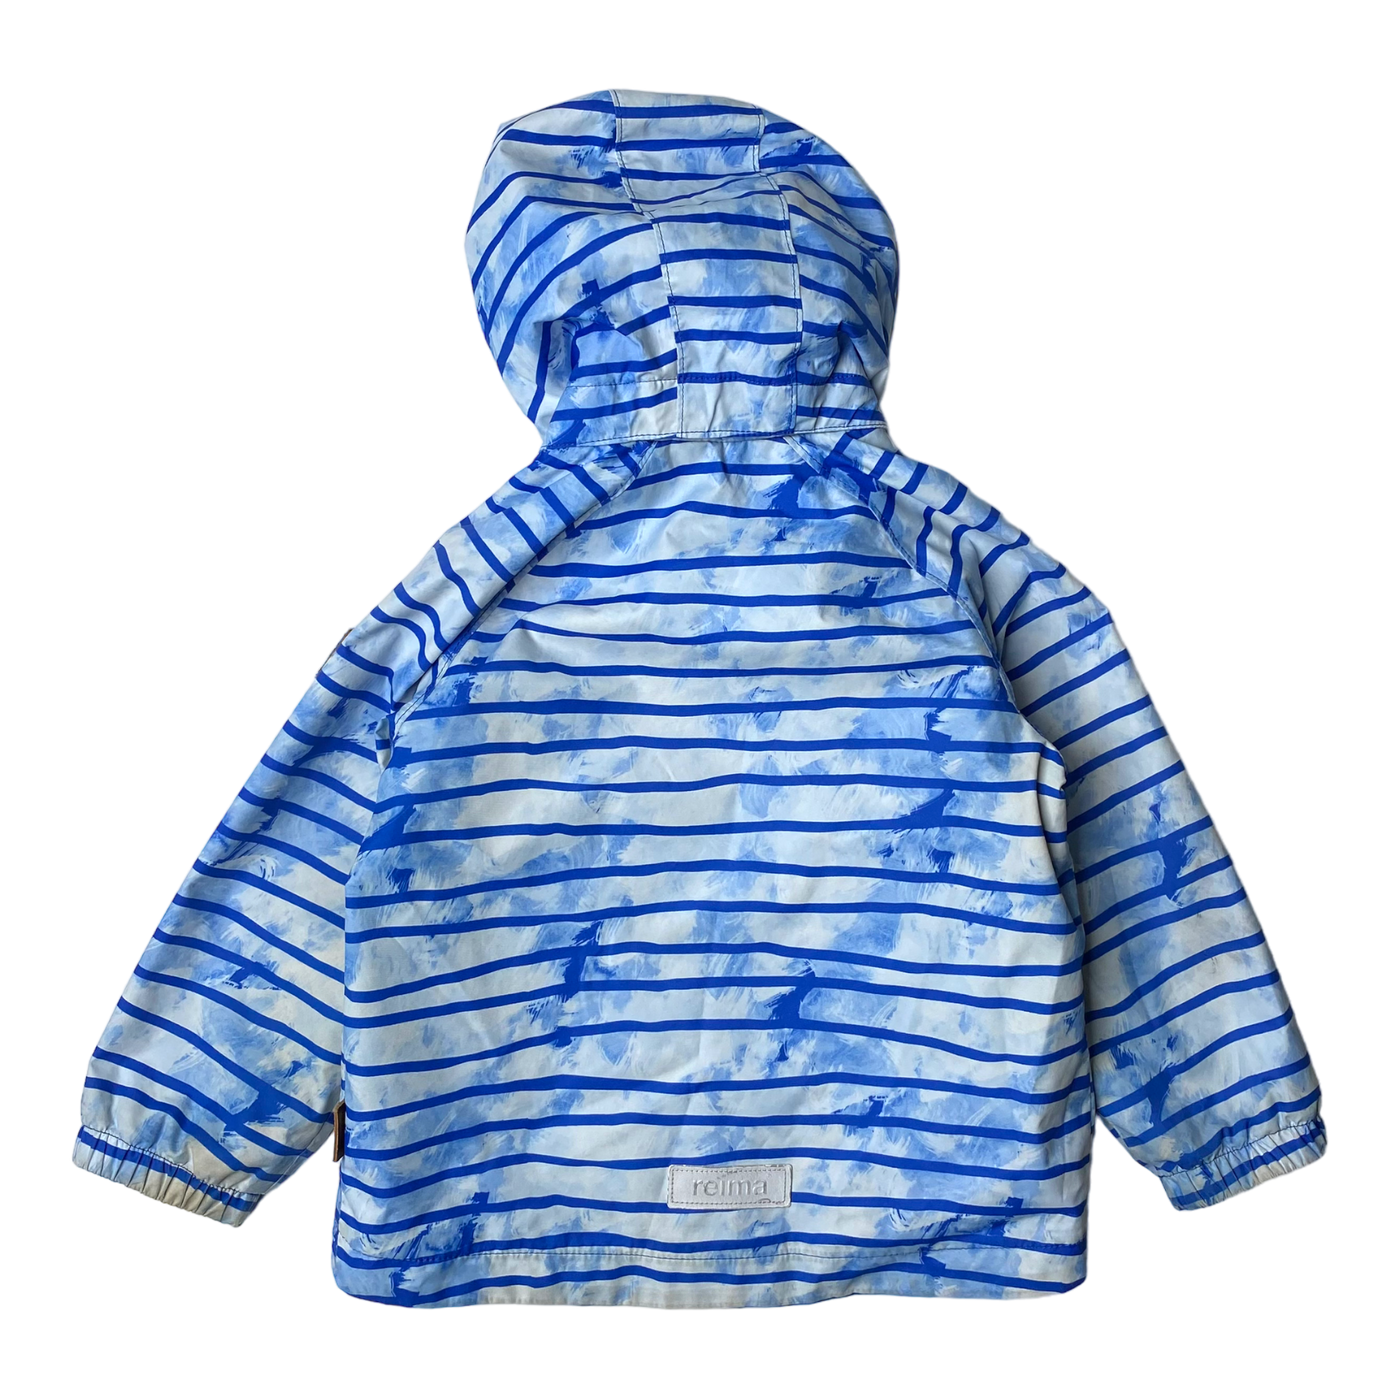 Reima shell jacket, blue | 92cm